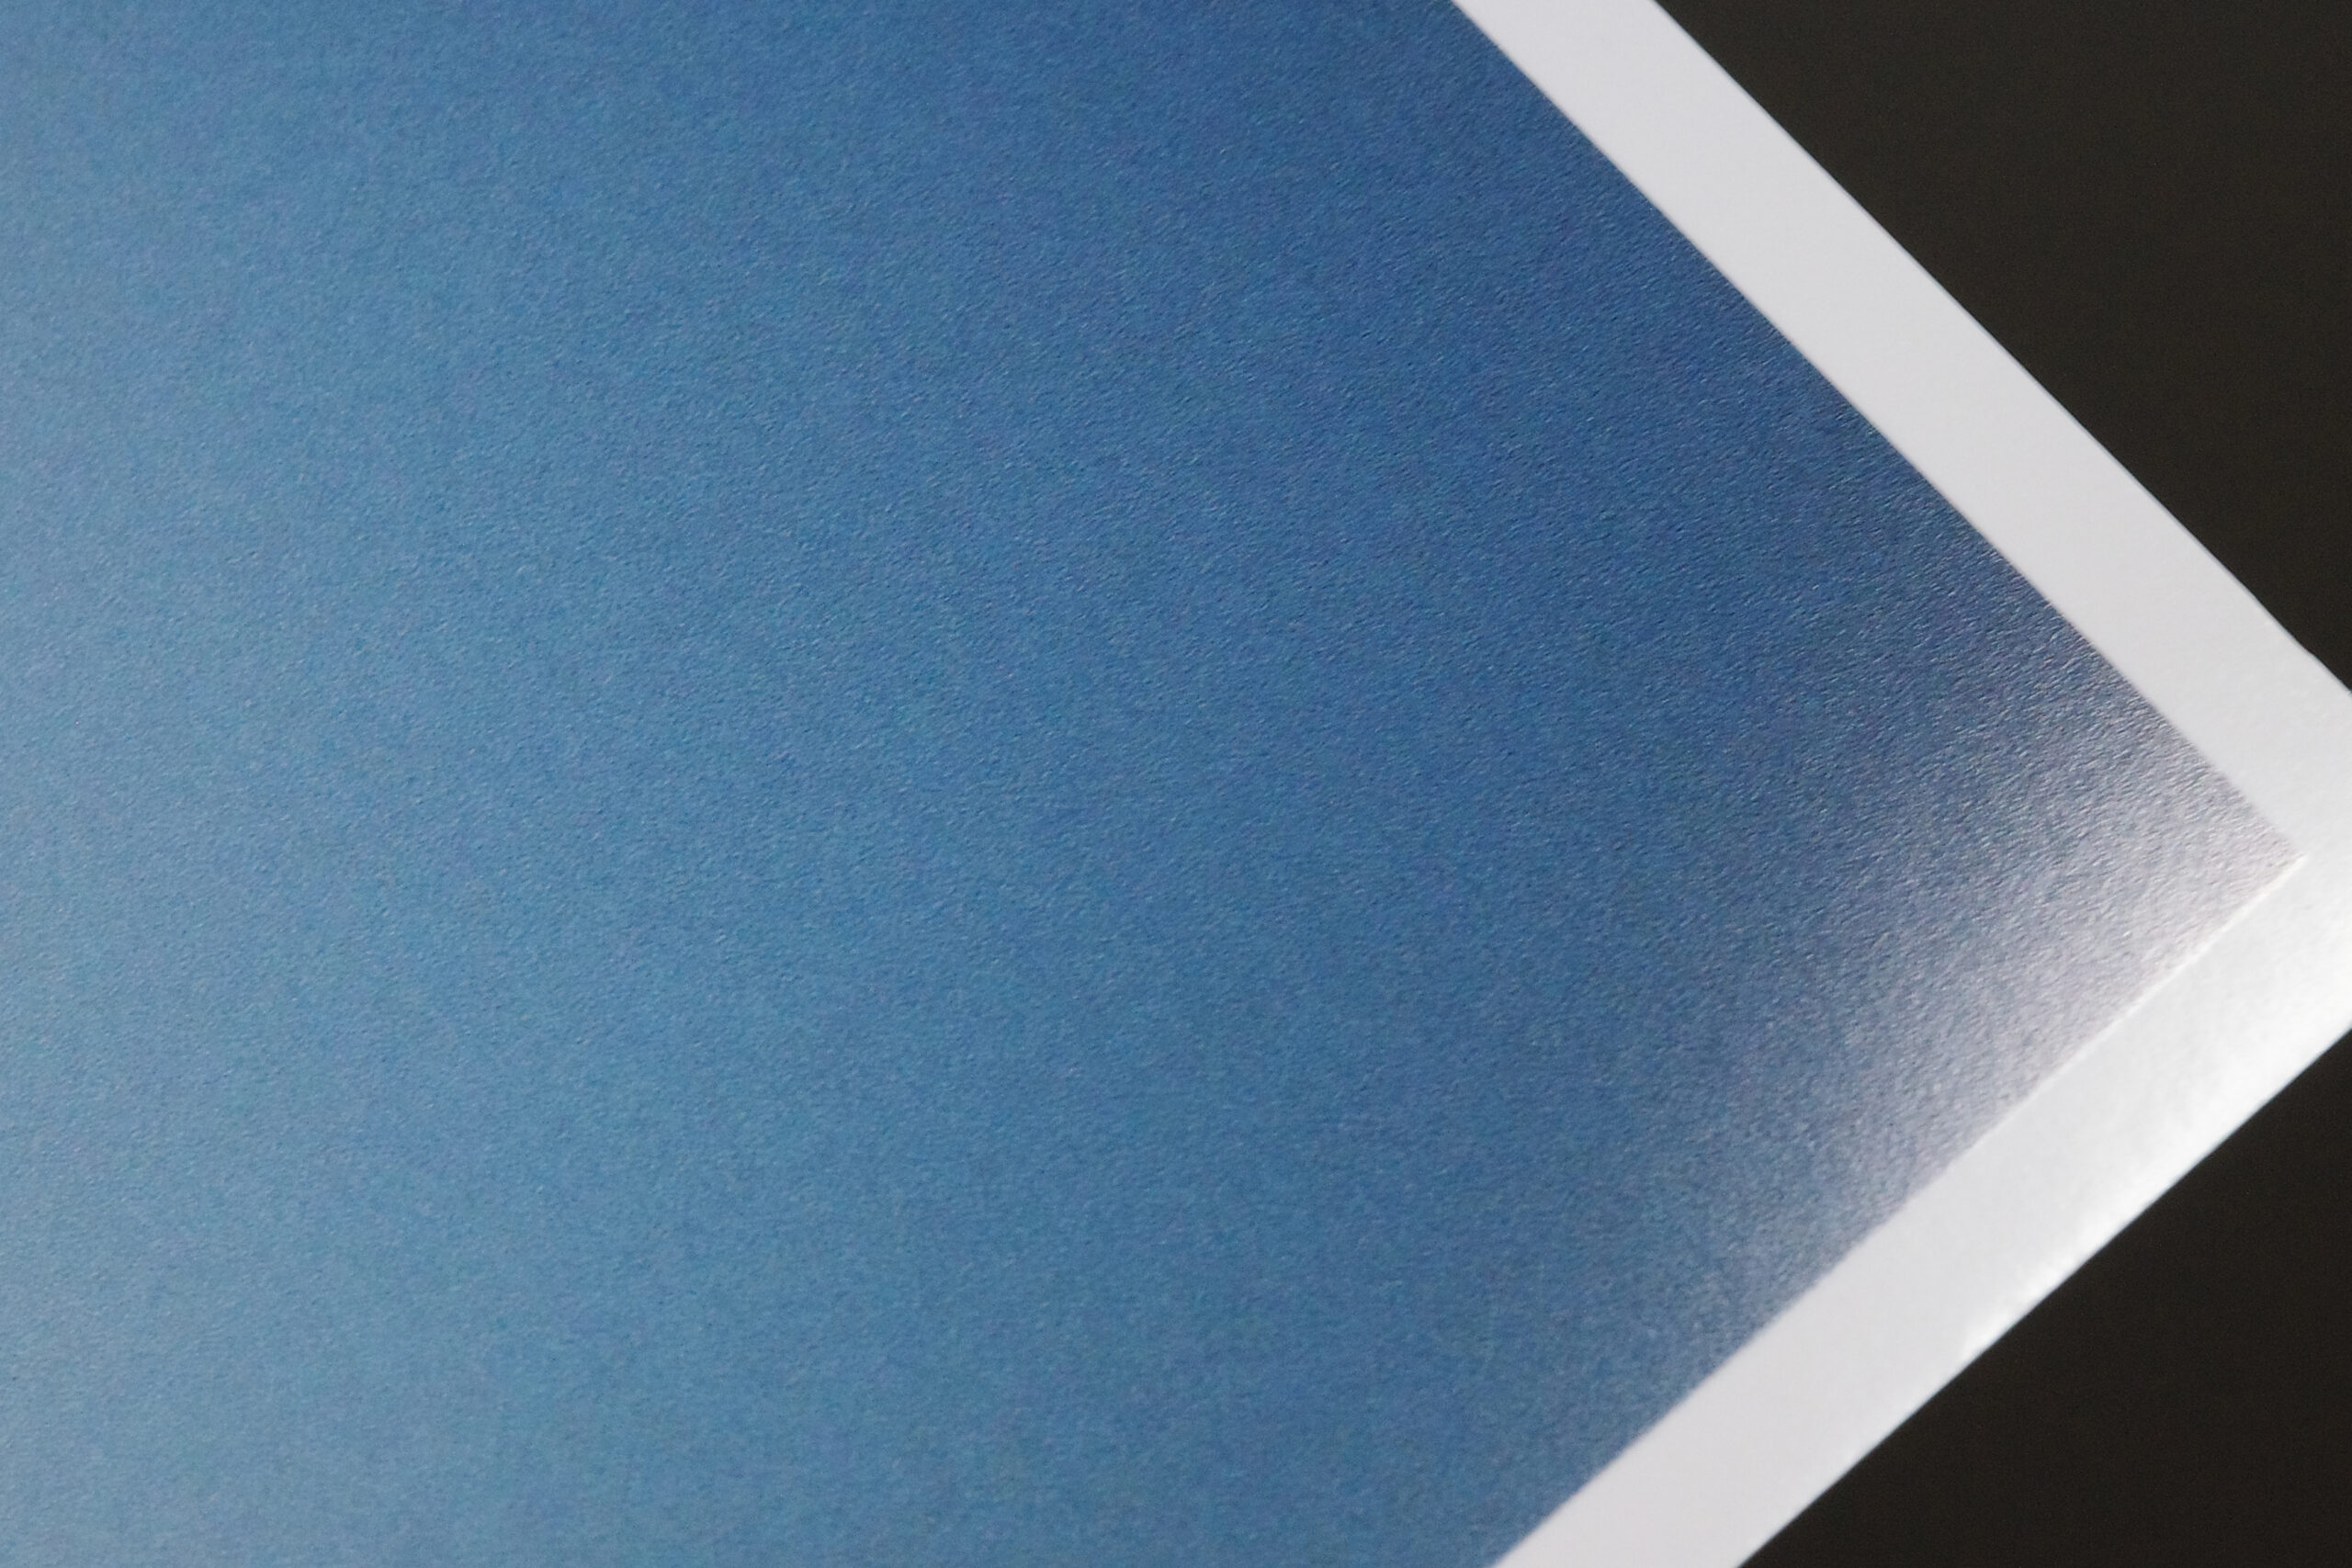 ELECOM 写真用光沢紙 ハイクオリティ 厚手 試し印刷・プリント